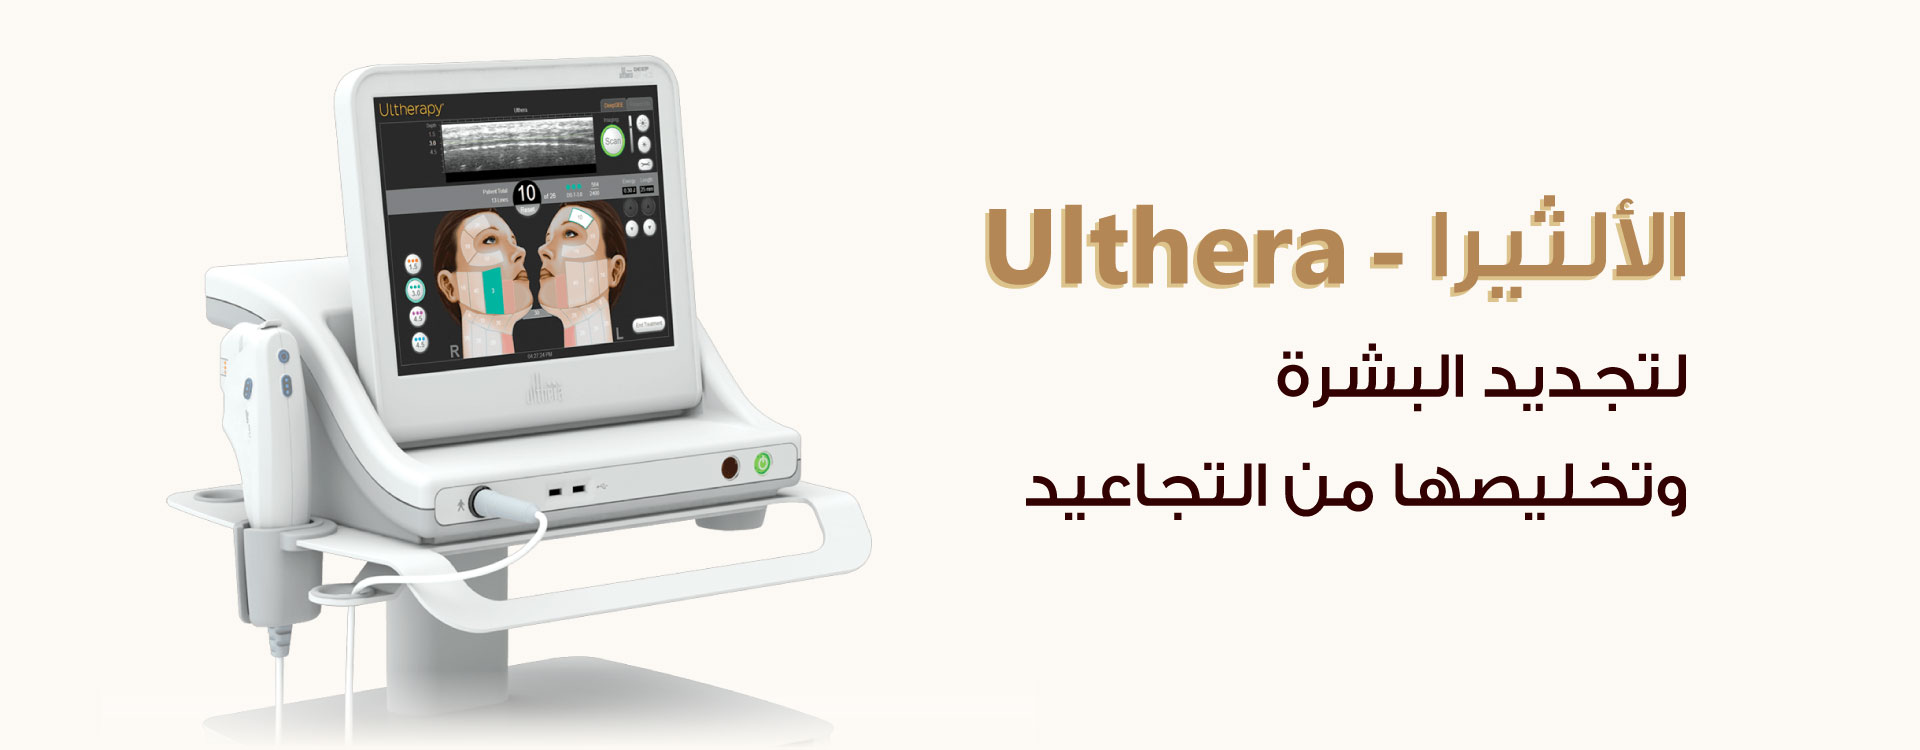 Ulthera - مستوصف سكن اند تيث الطبي